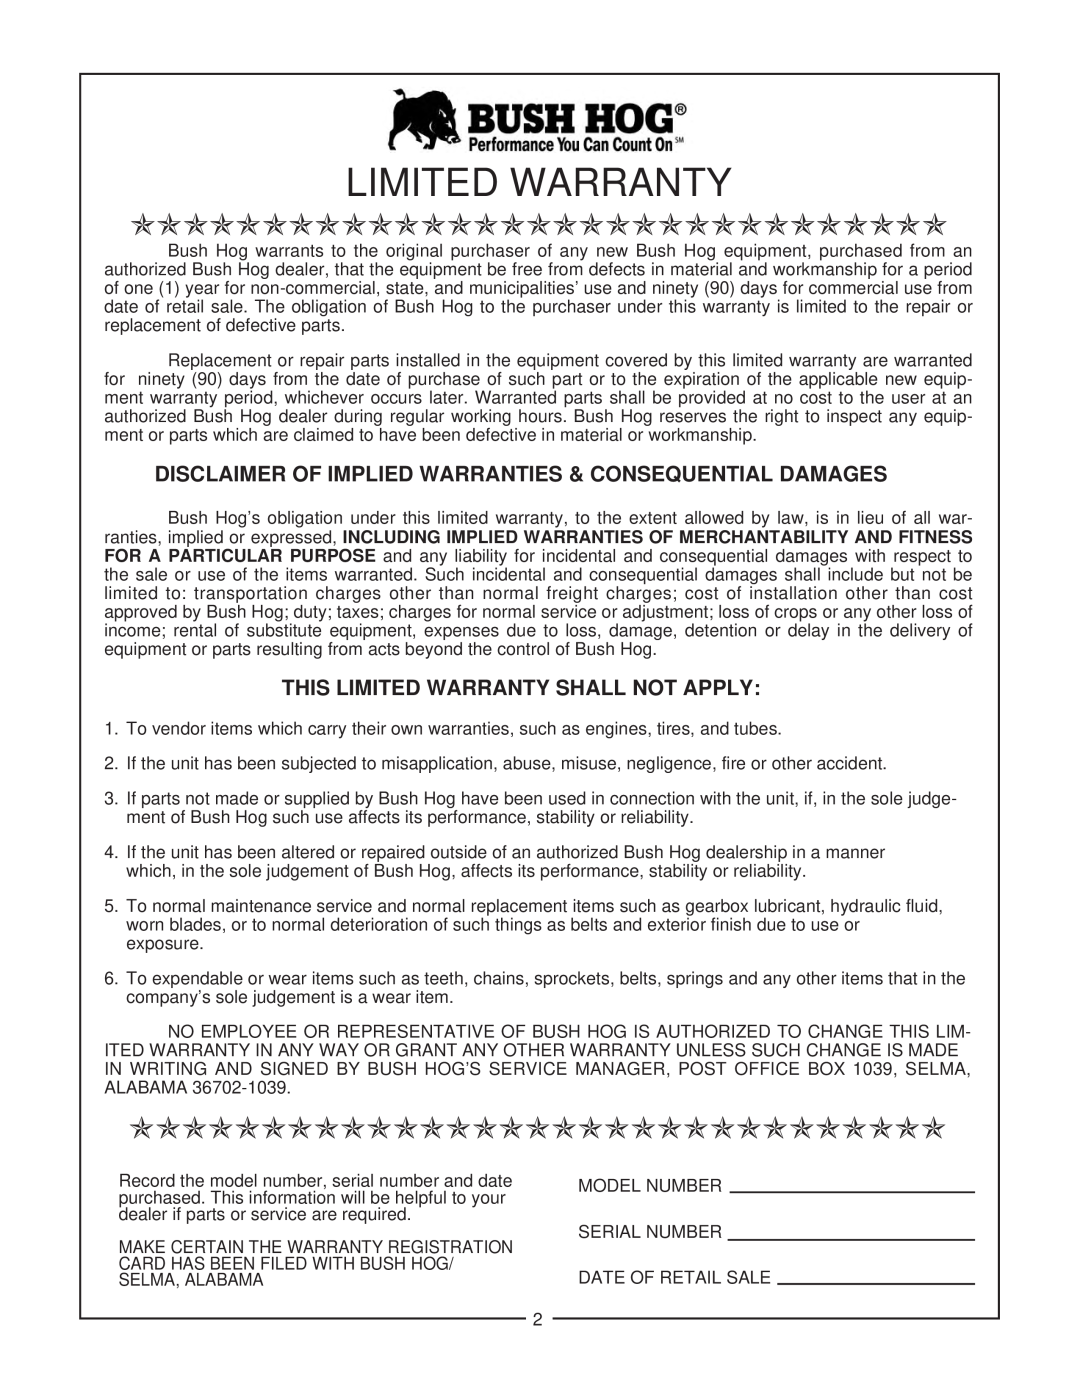 Bush Hog SM 60 manual This Limited Warranty Shall Not Apply, Ooooooooooooooooooooooooooooooo 